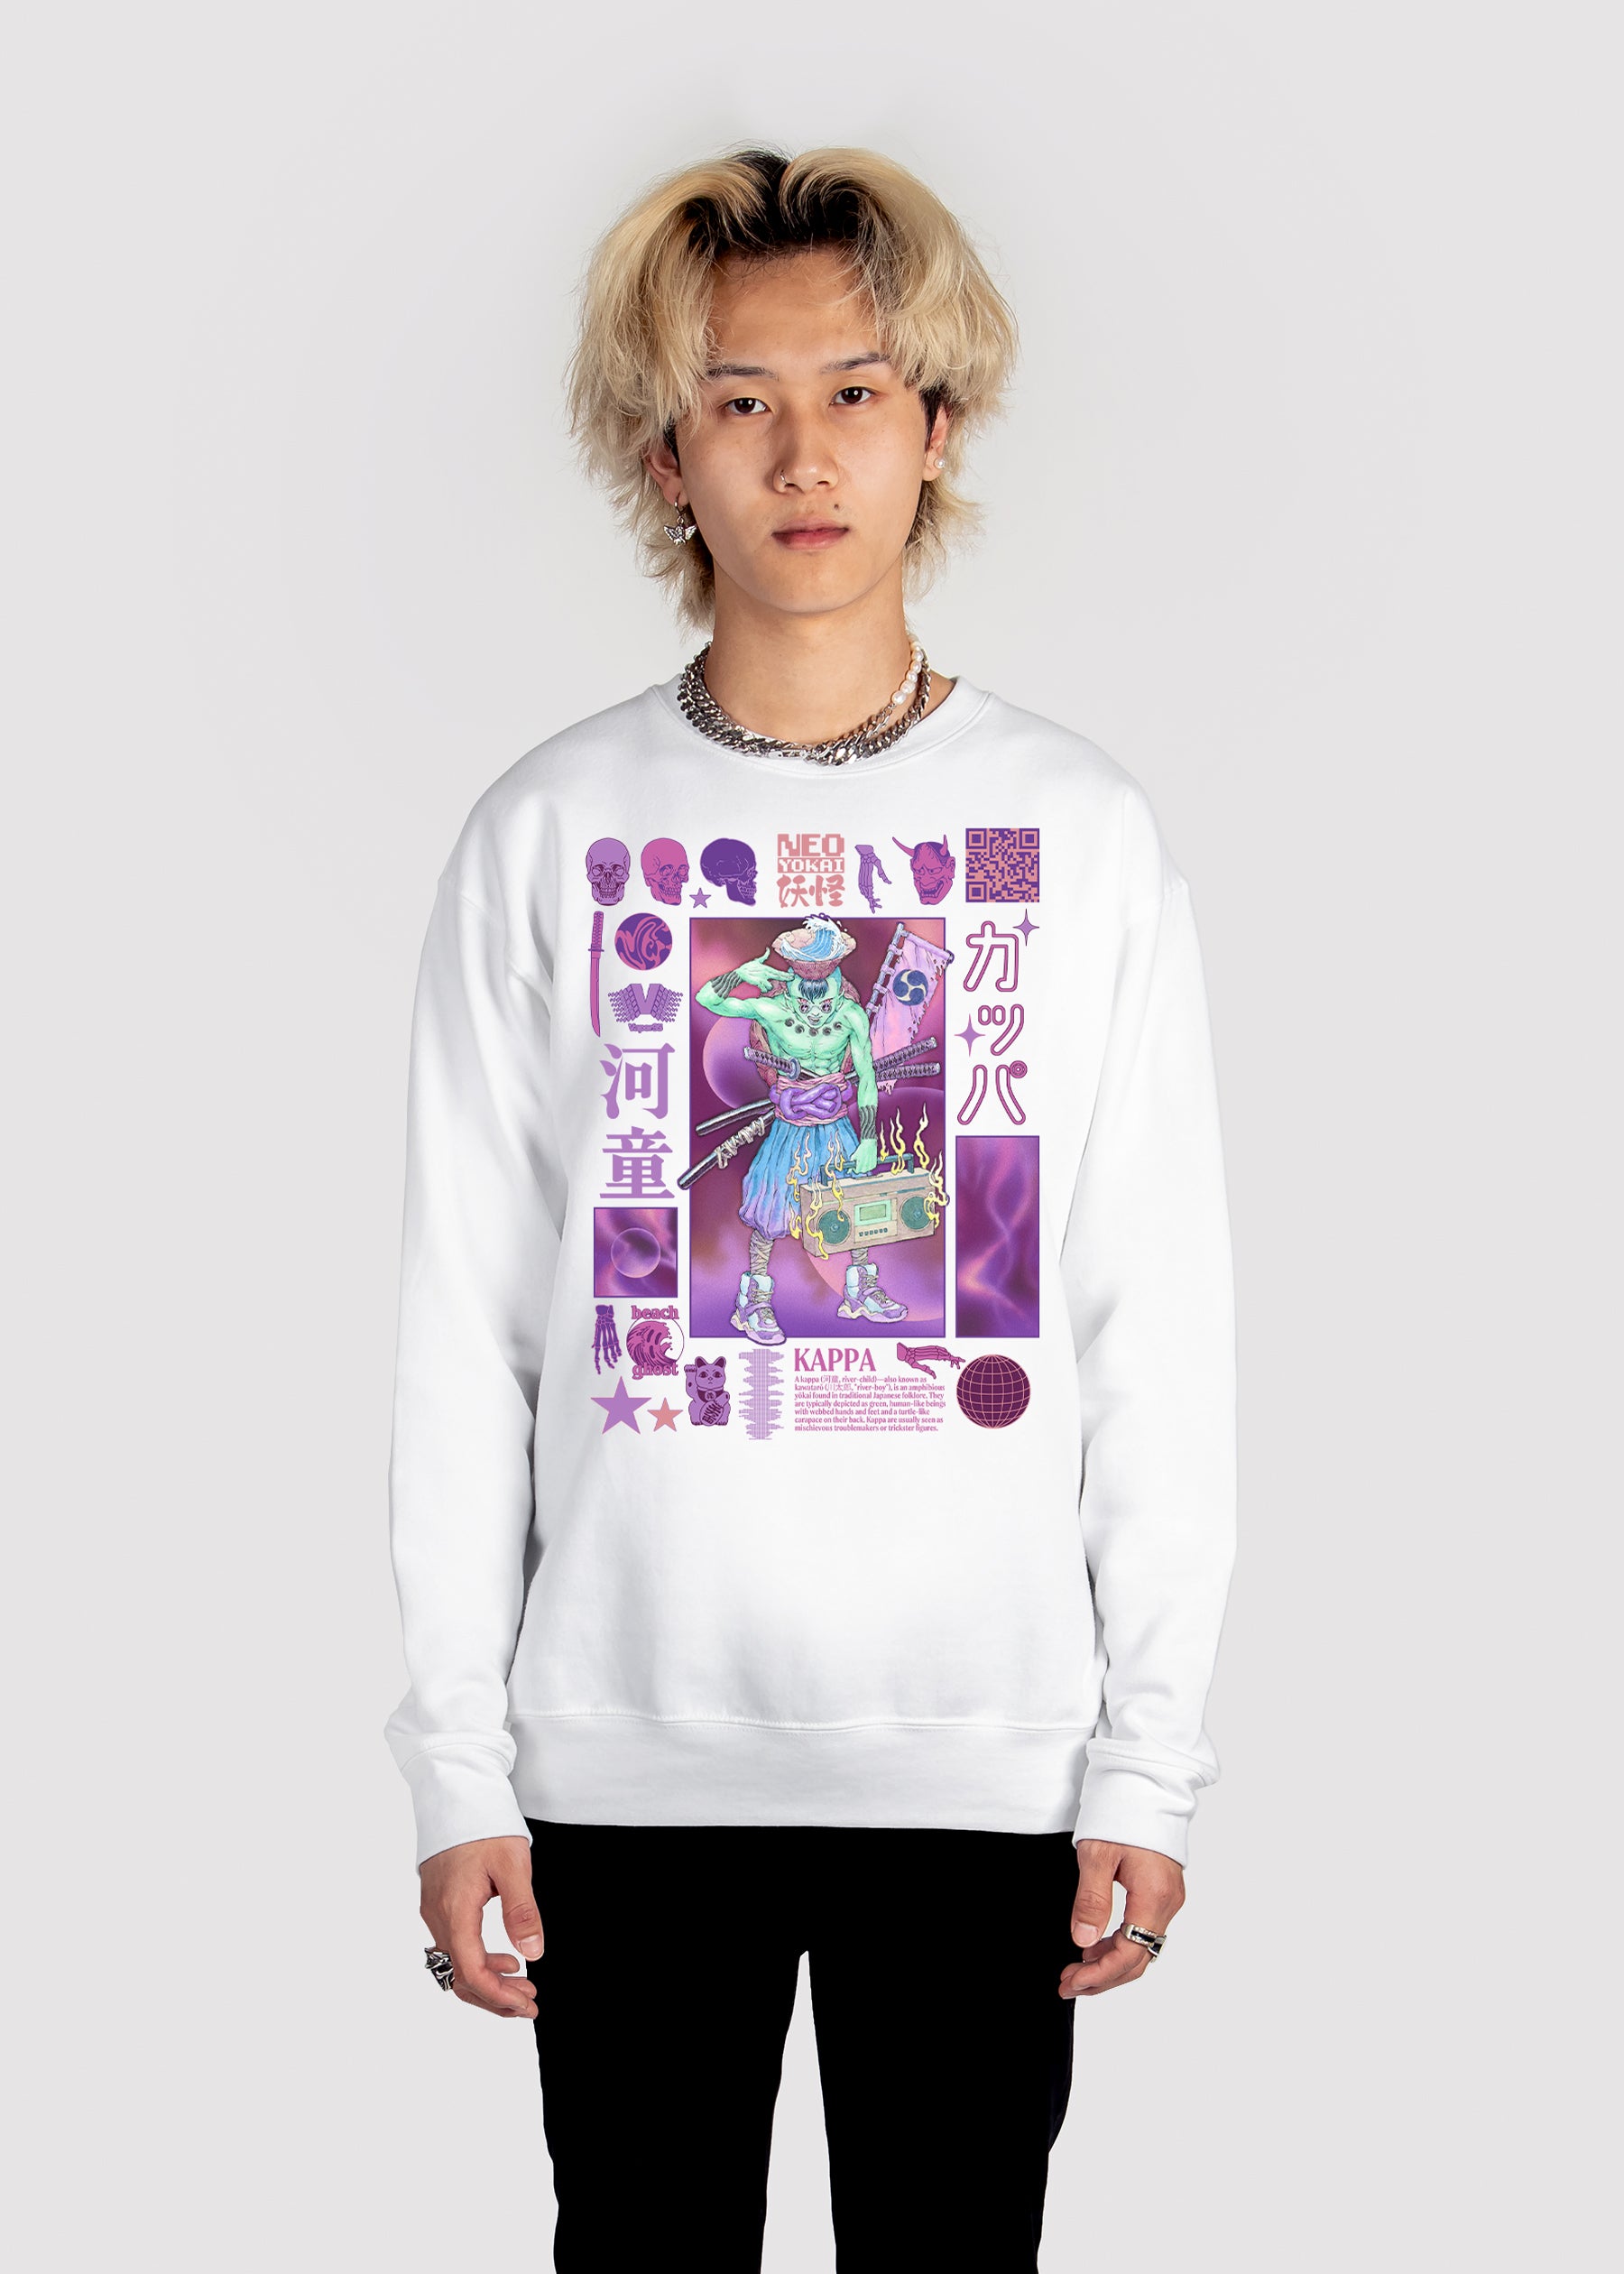 Vaporwave & Aesthetic Clothing | Kappa Sweatshirt – Vapor95